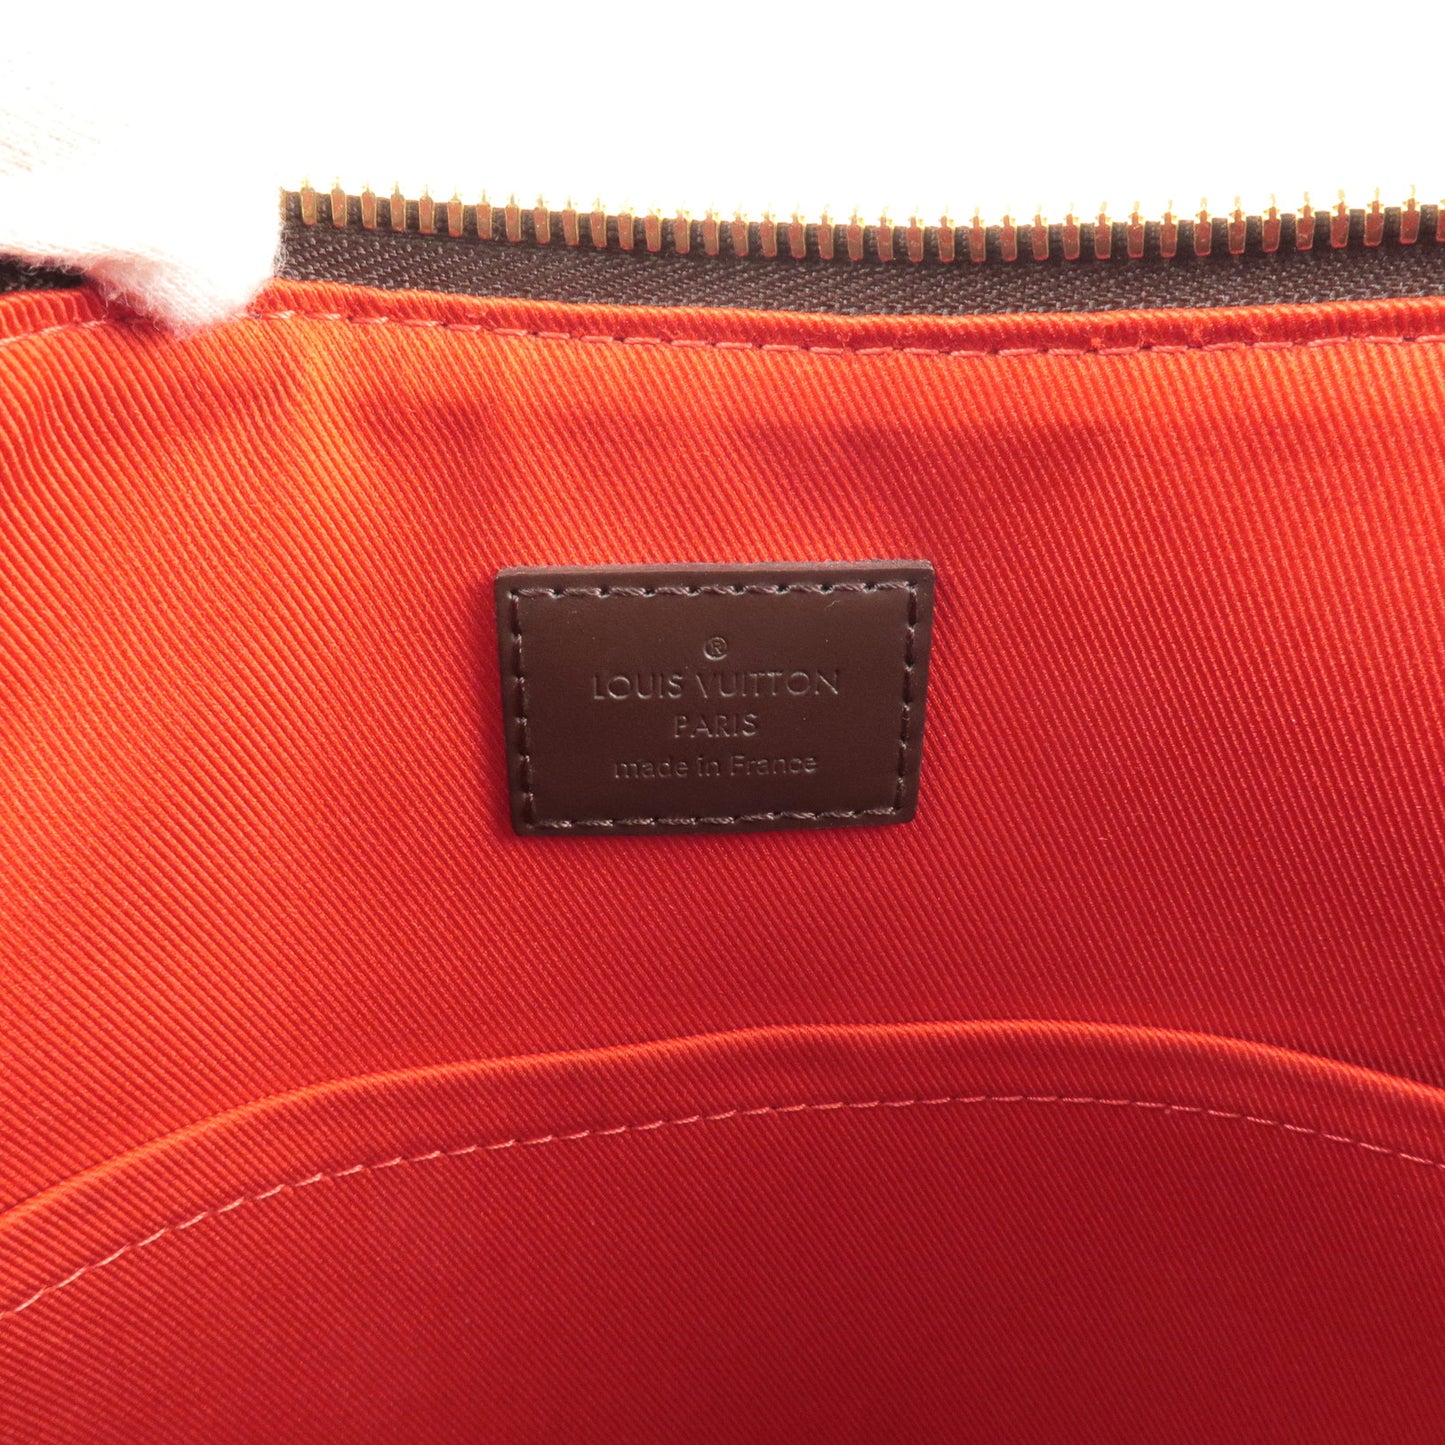 Louis Vuitton Damier South Bank Shoulder Bag N42230